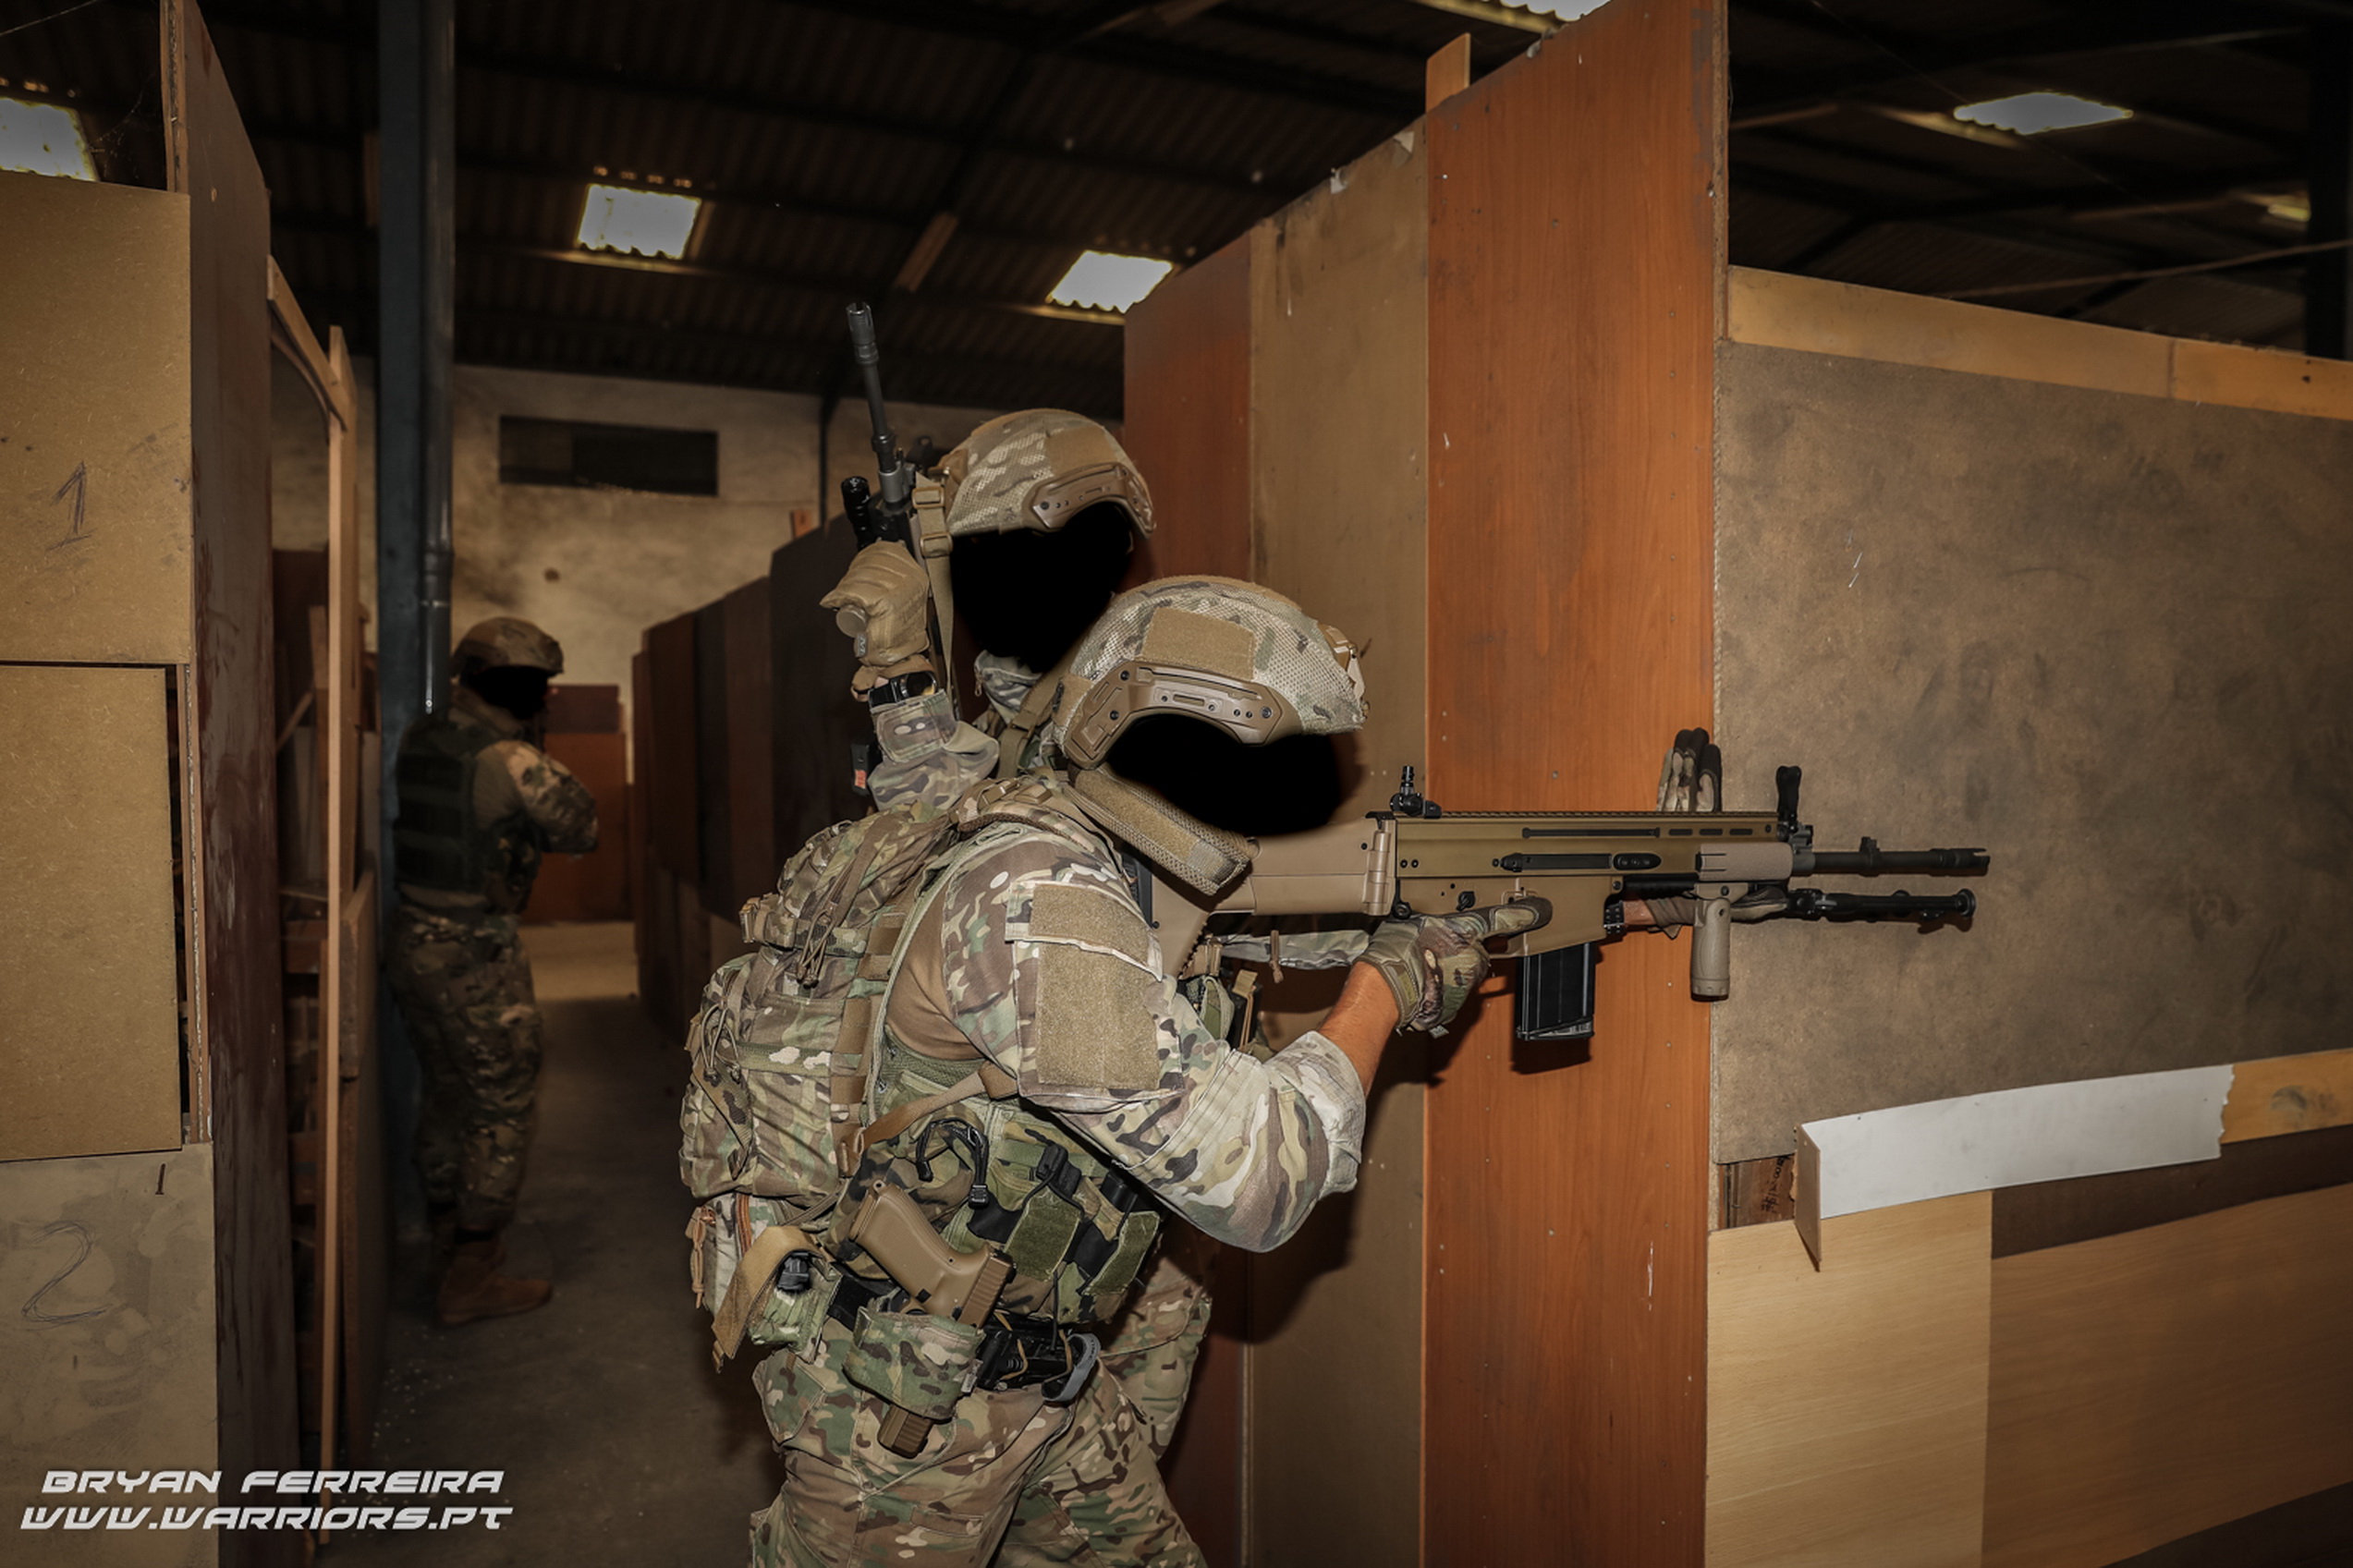 Commandos train CQB in preparation for 8th FND for RCA